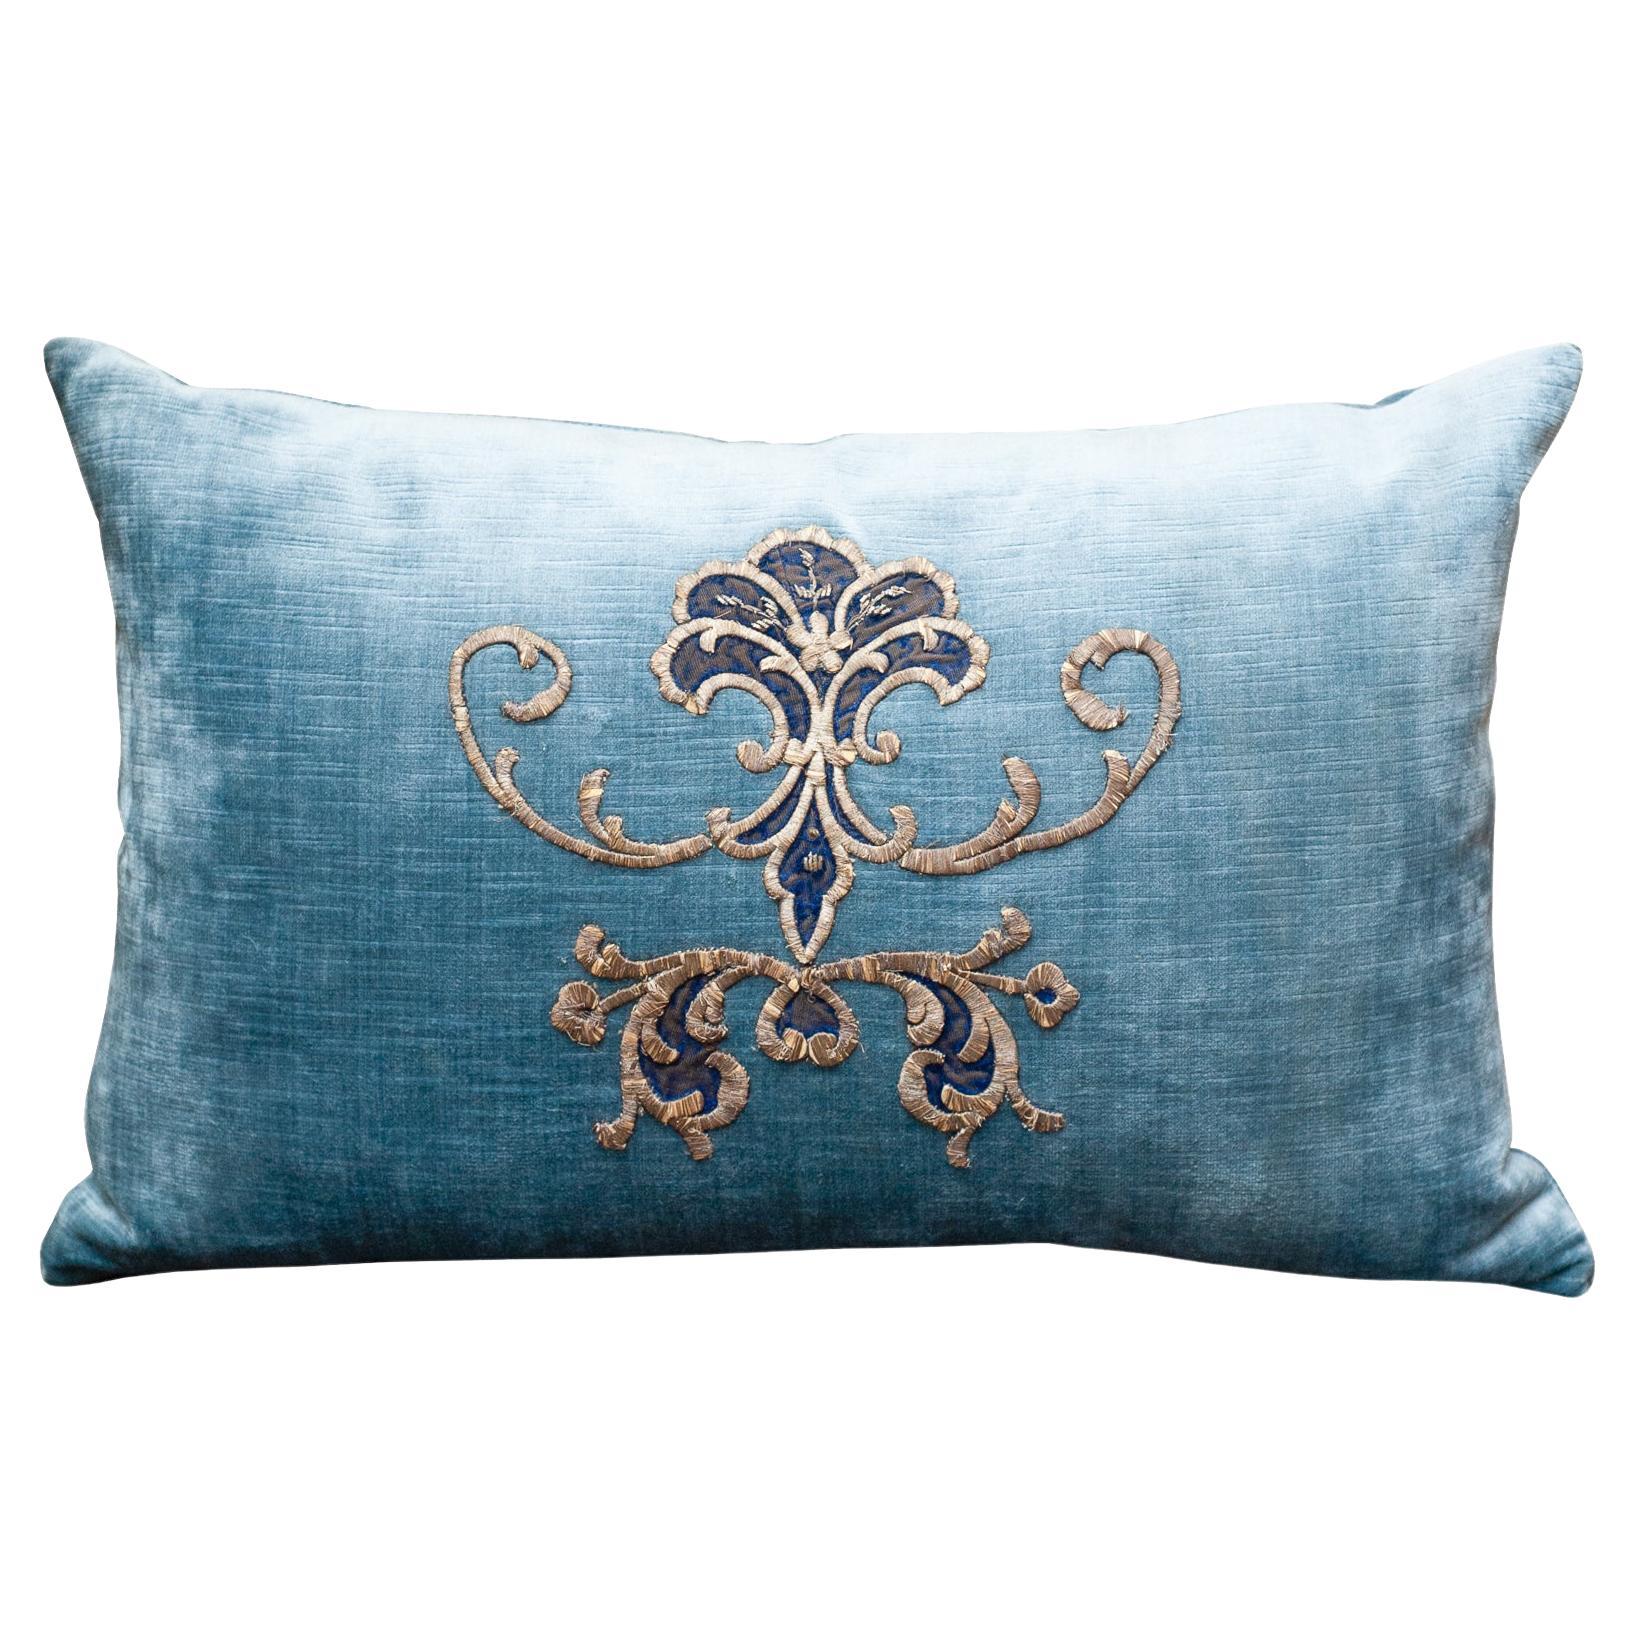 Contemporary Medium Blue Velvet Pillow with Antique Embroidered Appliqué